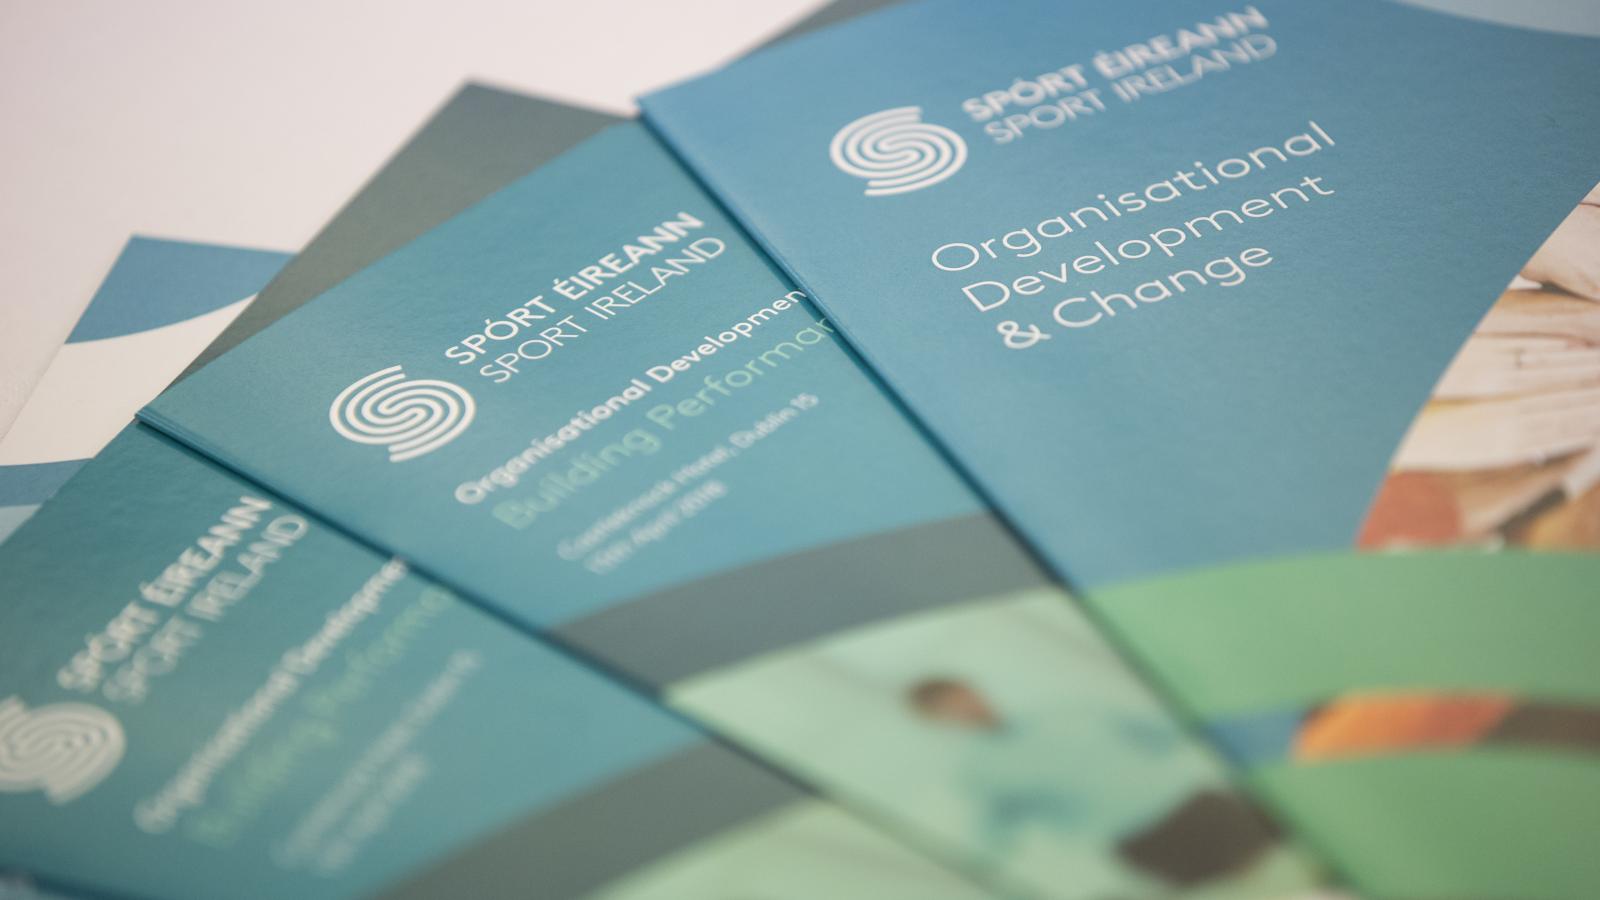 Organisational Development and Change booklet